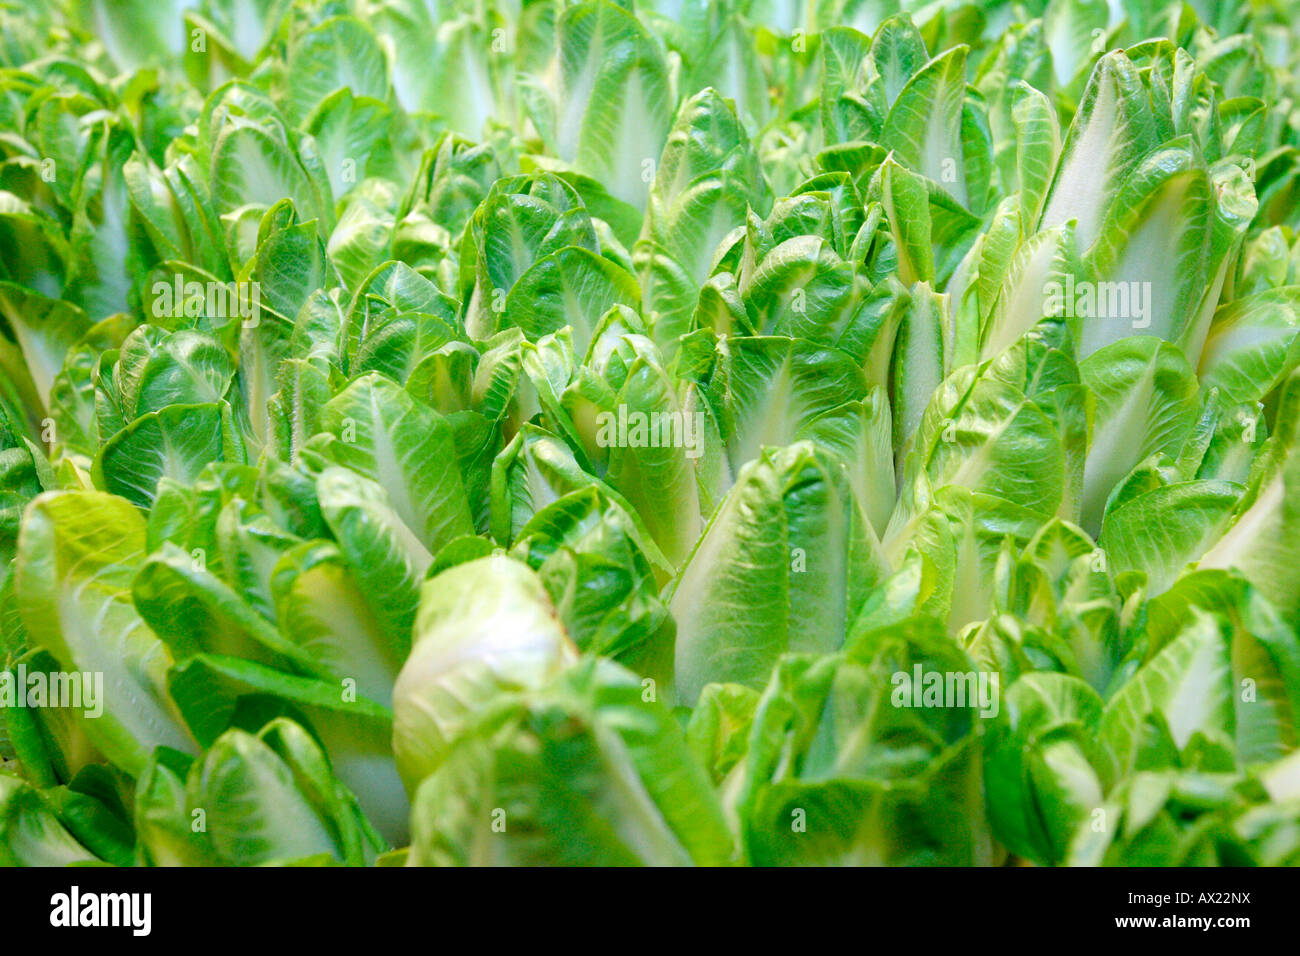 Chicoree salad bed Stock Photo